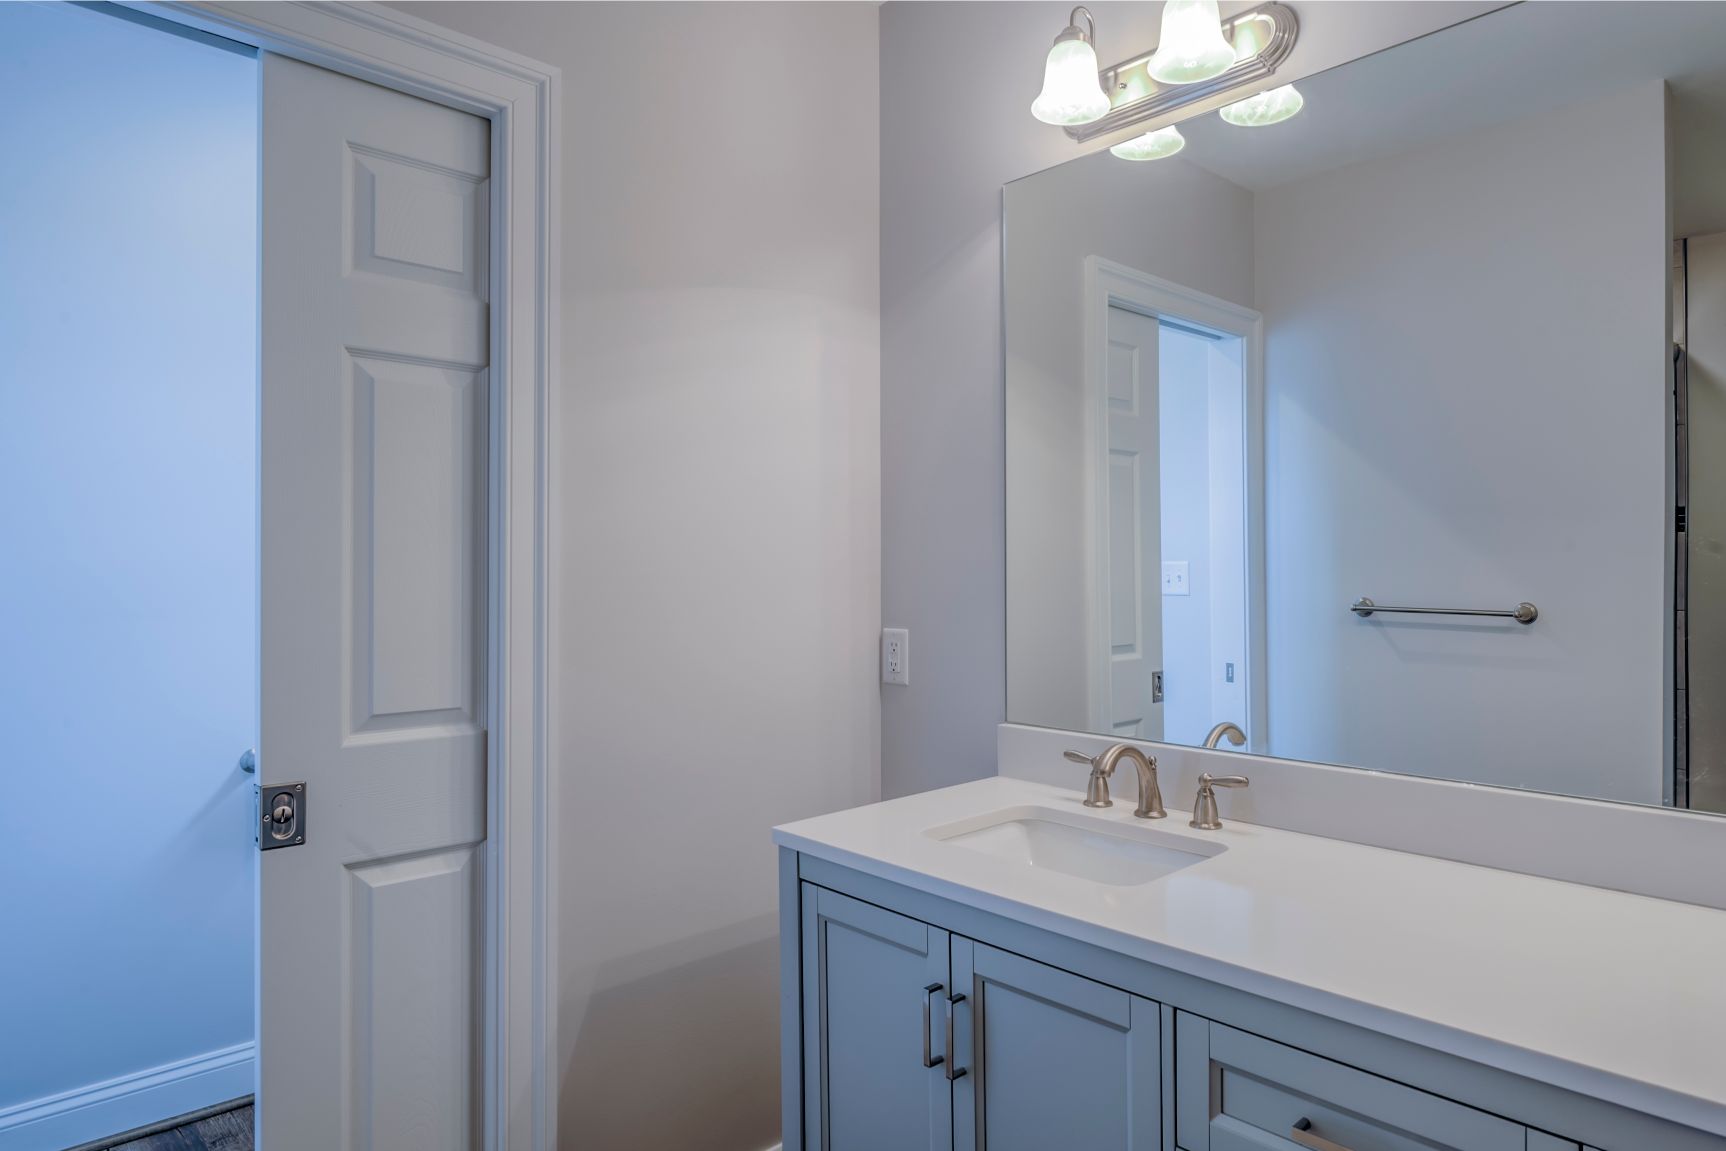 Bathroom Remodel in October Glory, Ocean View DE with Large Mirror and White Vanity Top